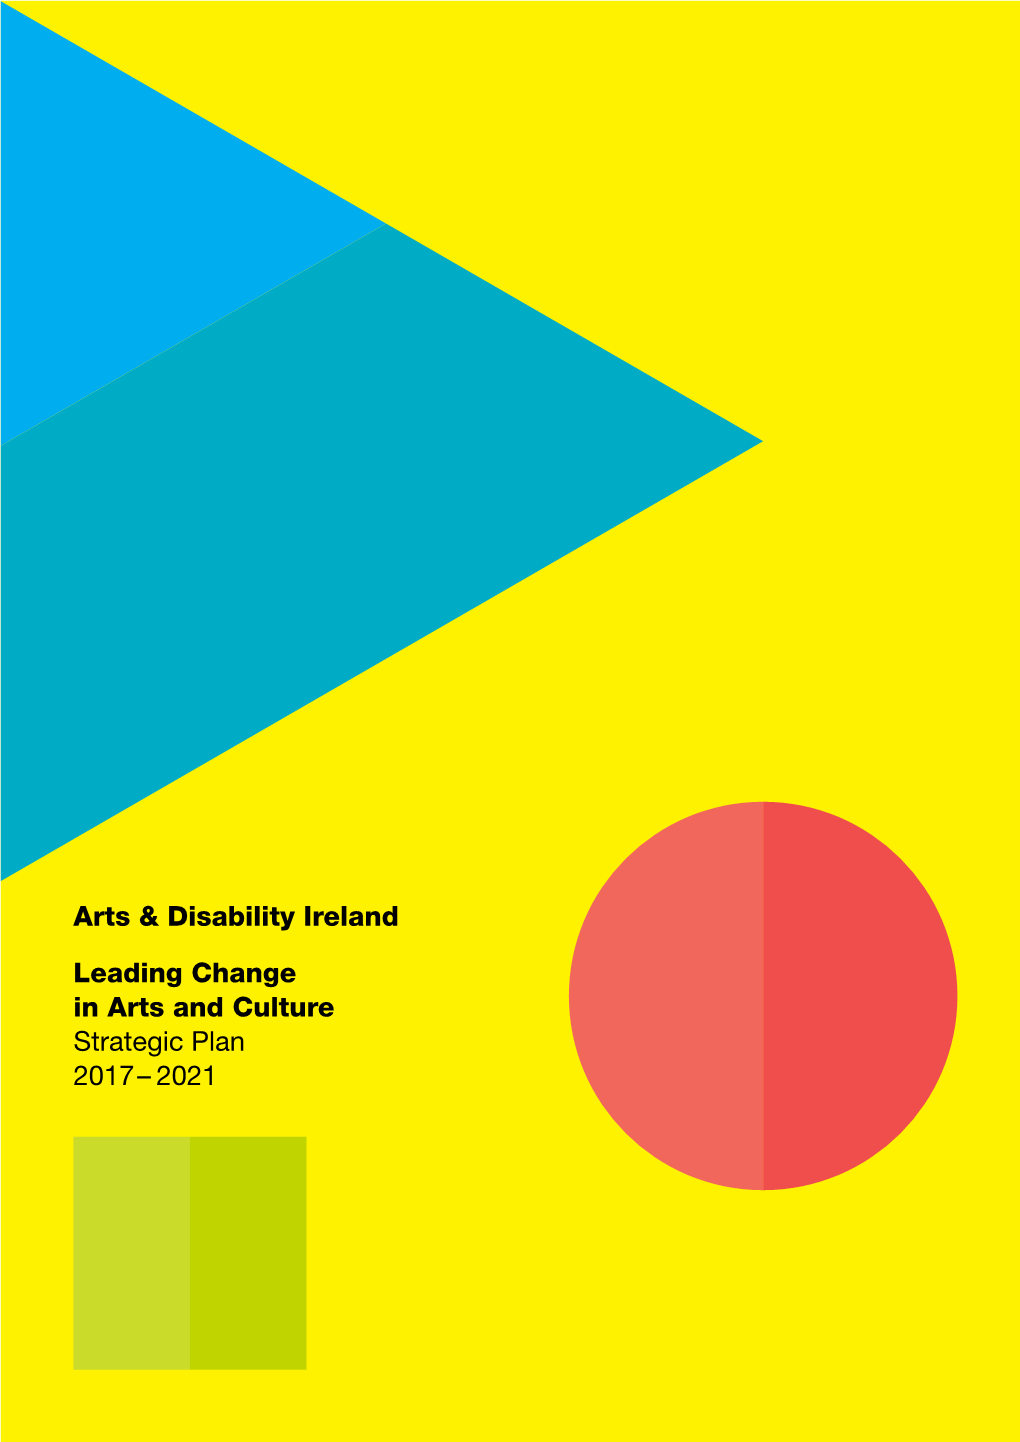 Leading Change in Arts and Culture – ADI's Strategic Plan